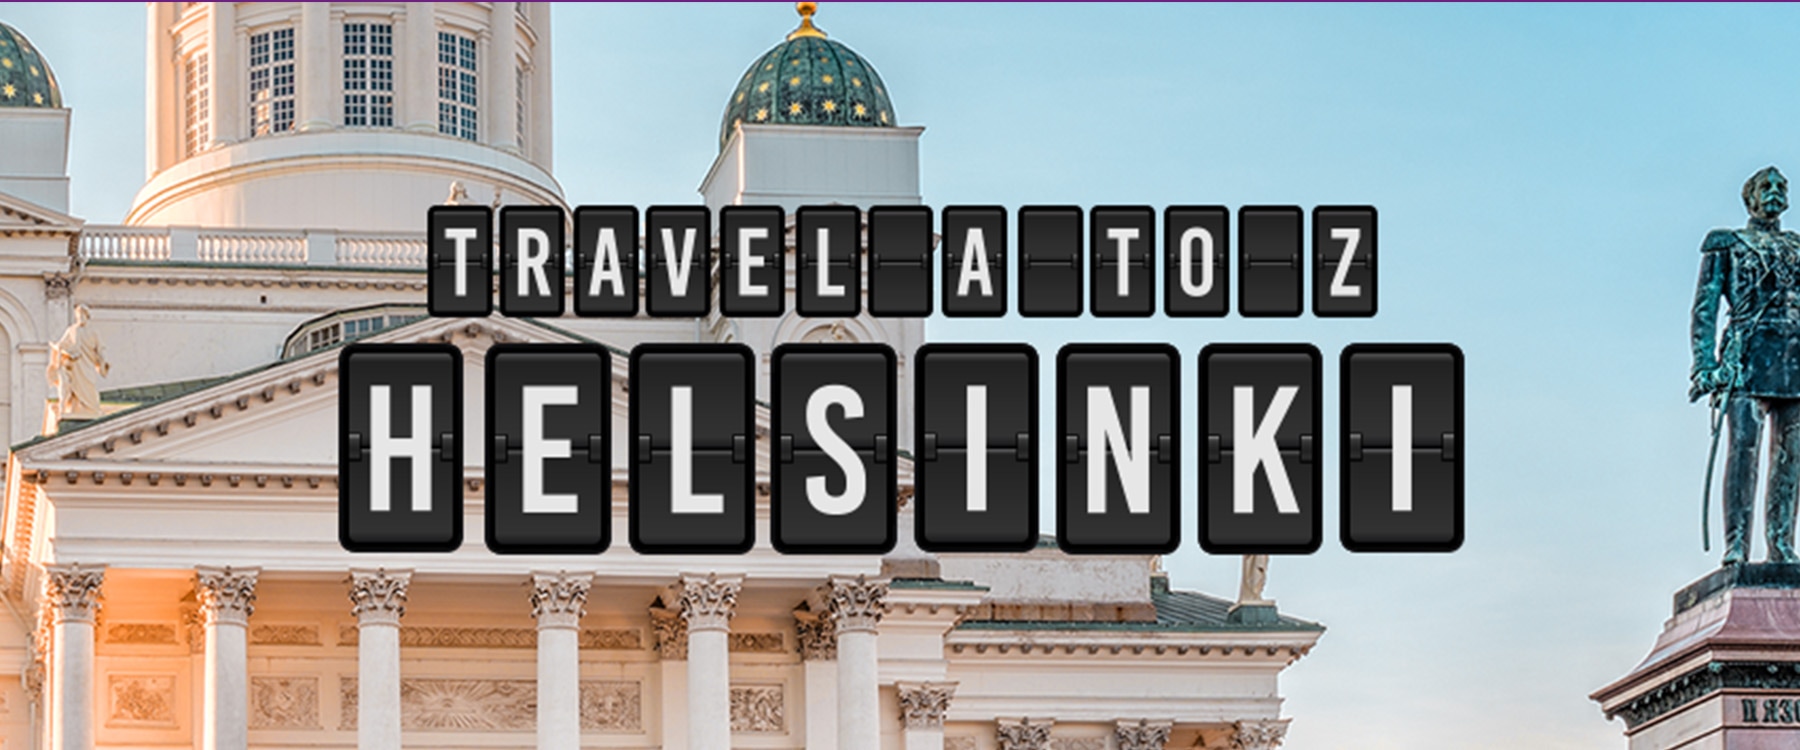 Travel A to Z Helsinki